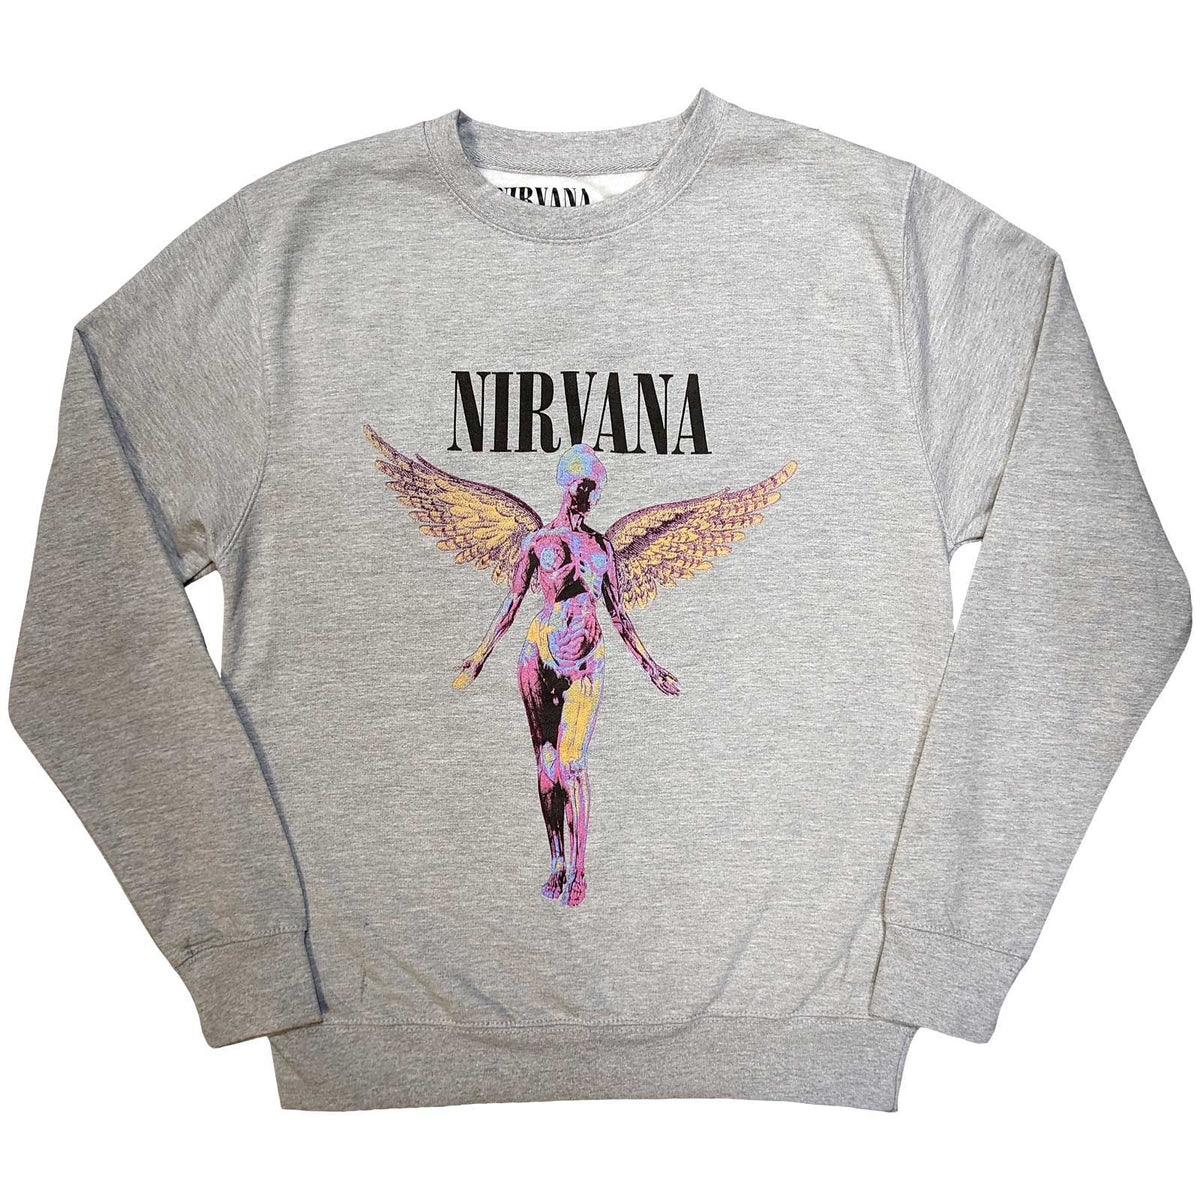 Nirvana Sweatshirt - In Utero - Grey Official Licensed Design